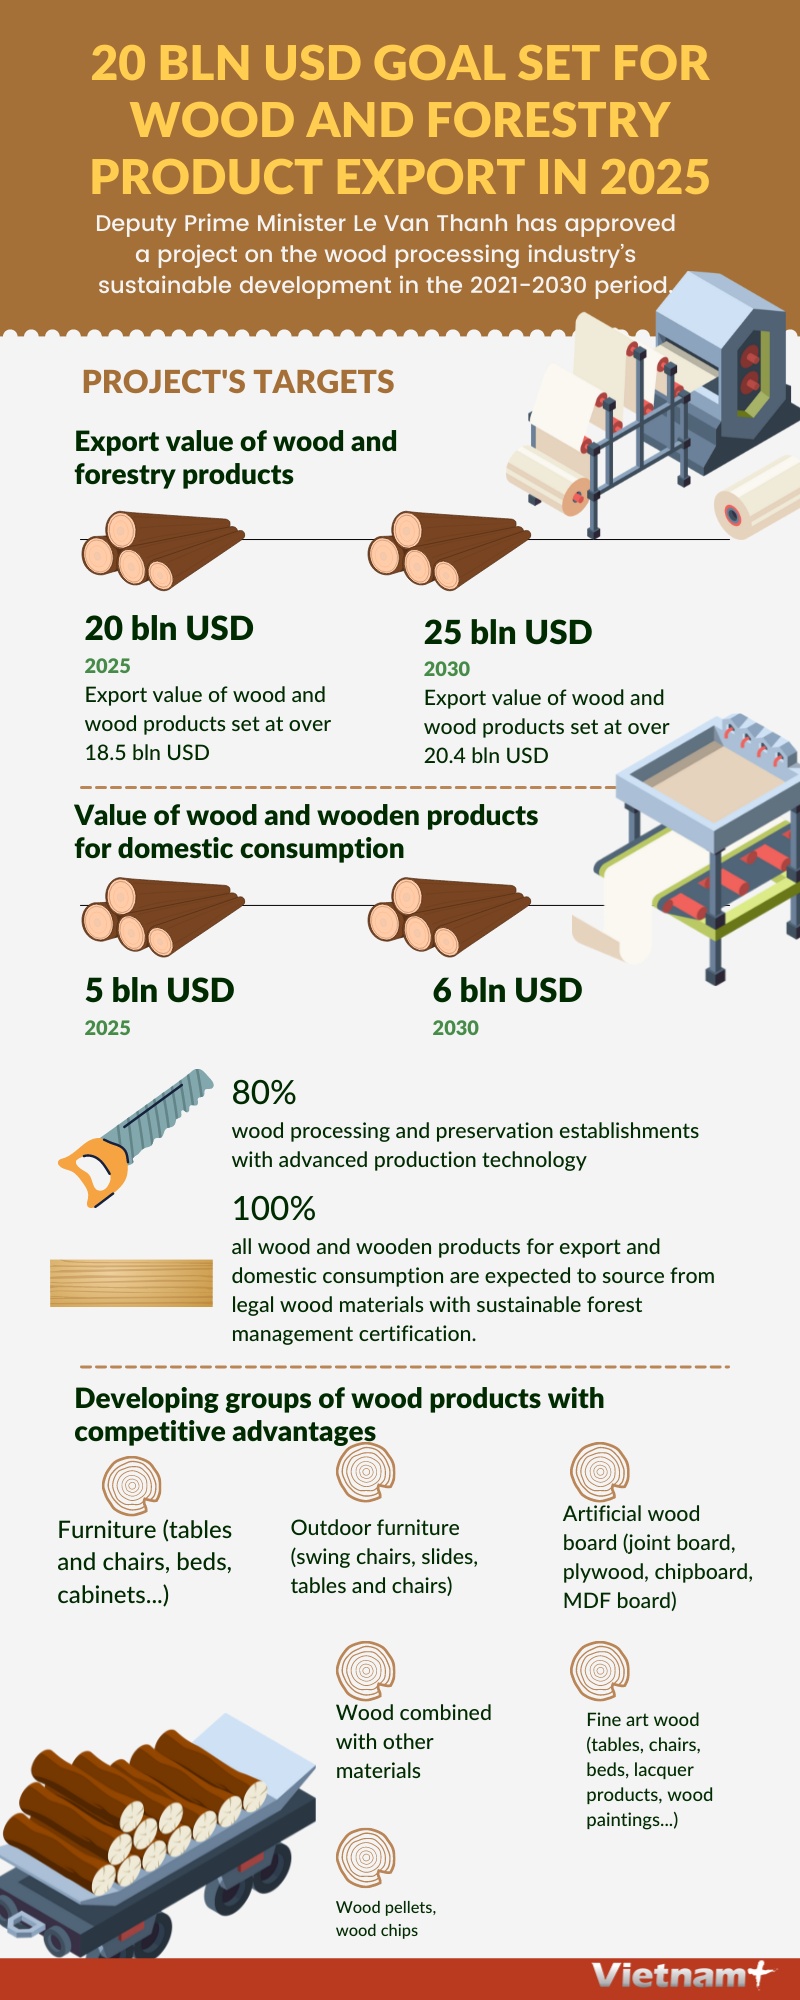 20 billion USD goal set for wood export in 2025